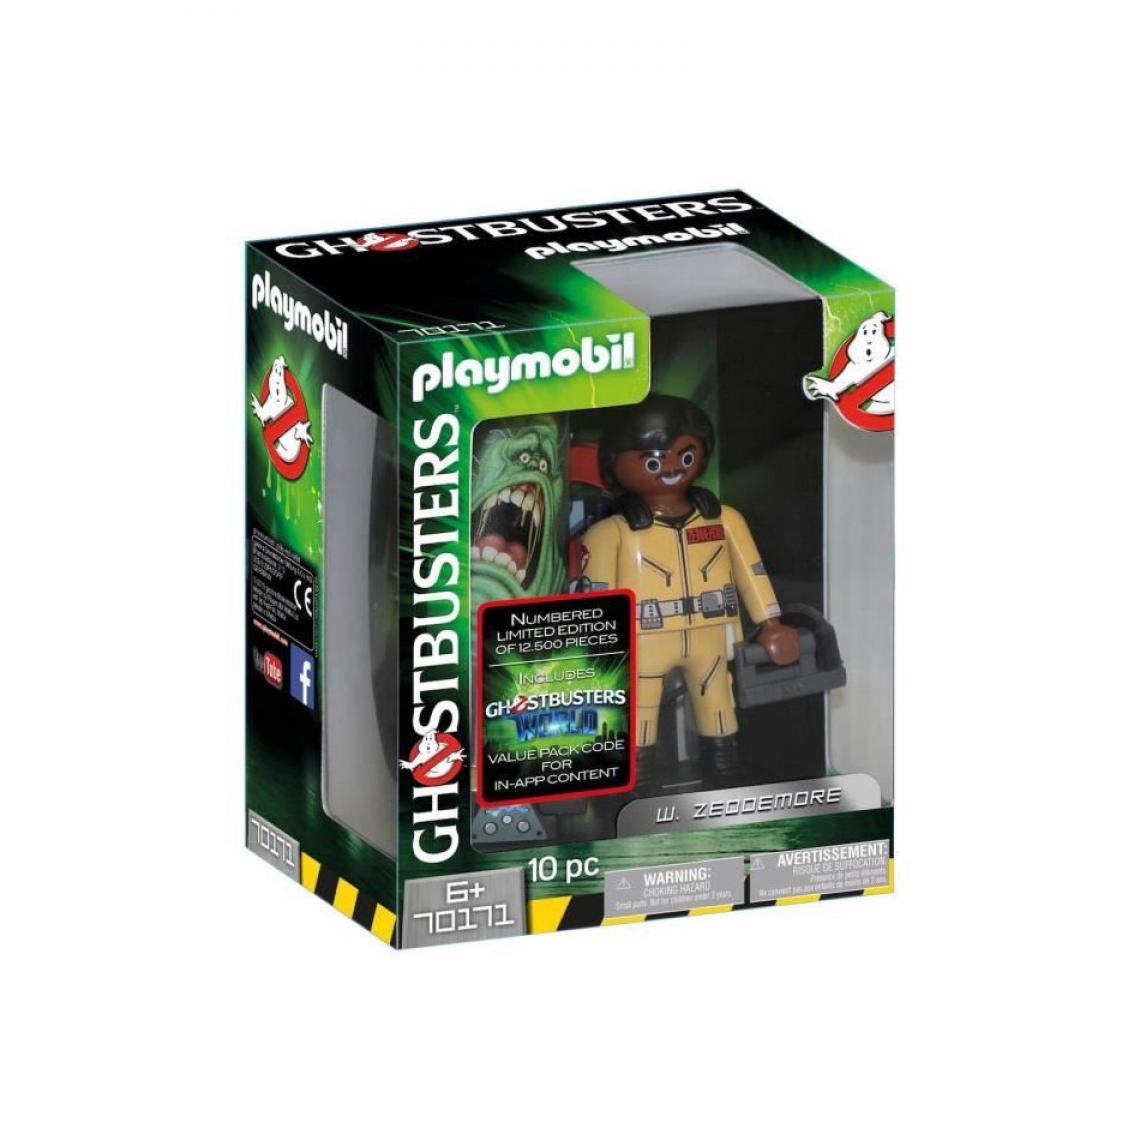 Playmobil - 70171 Playmobil Ghostbusters Edition Col Zeddemore 0419 - Playmobil